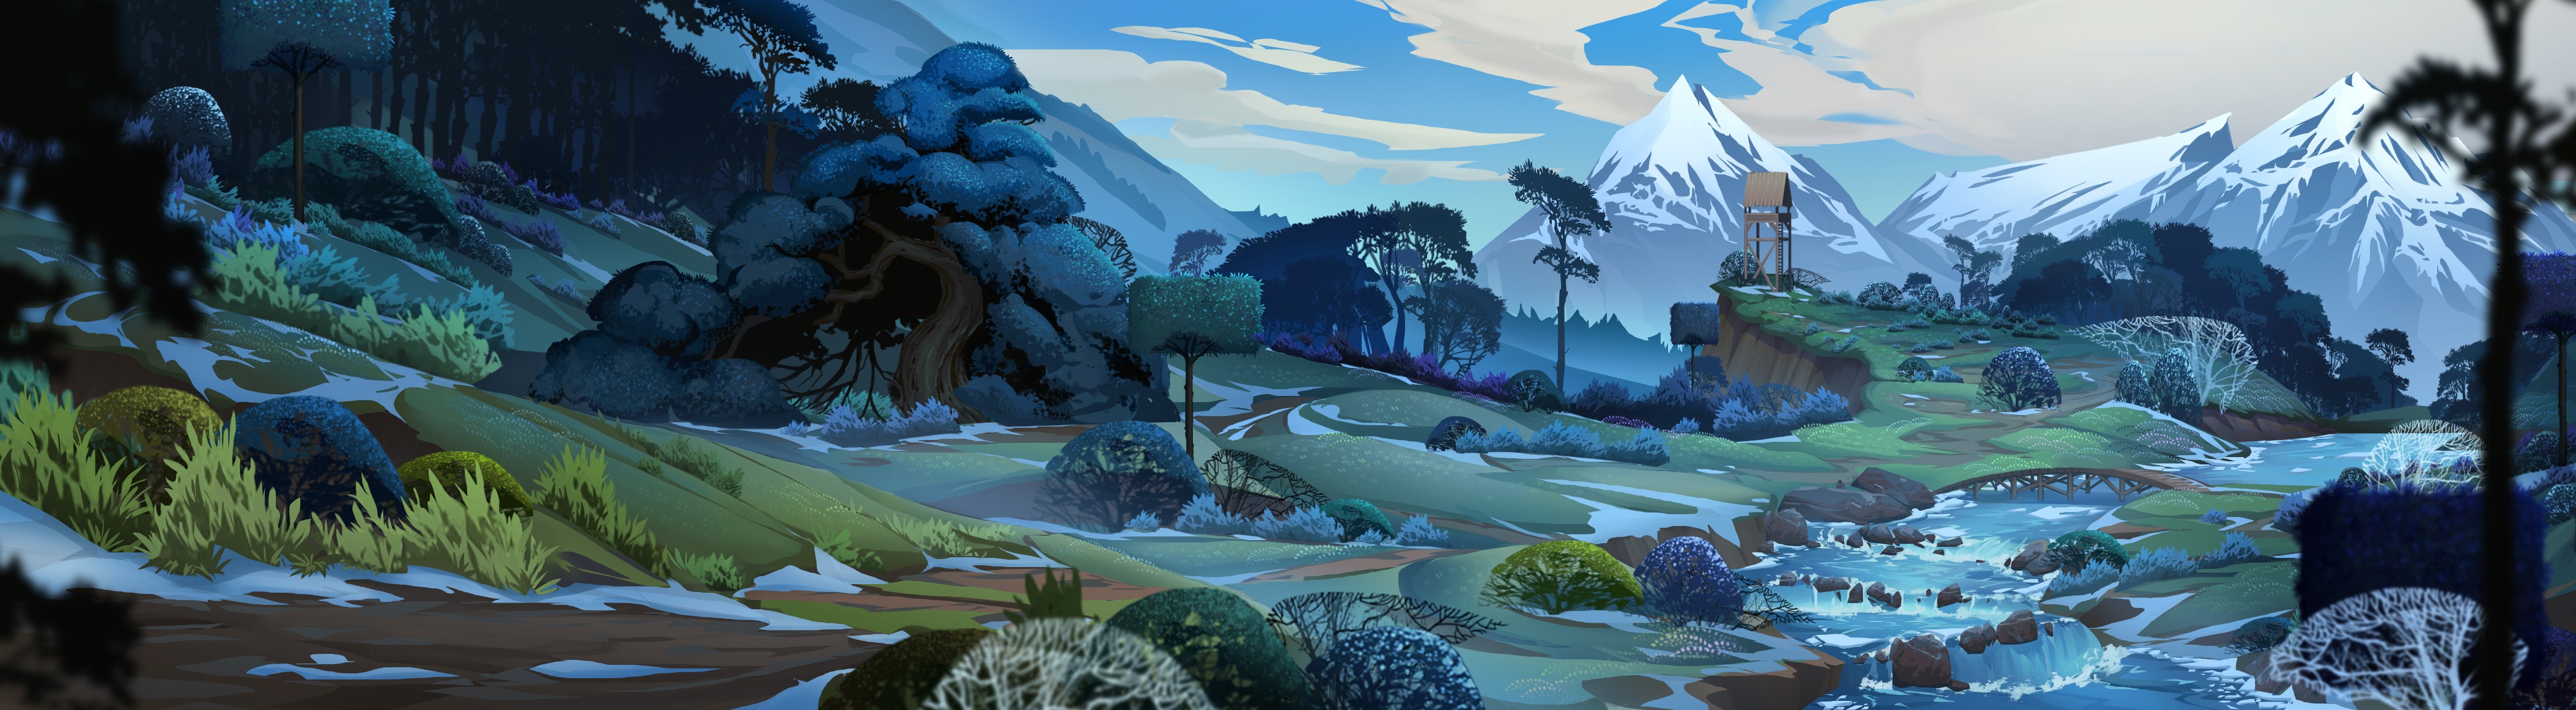 anime landscape dual monitor wallpaper